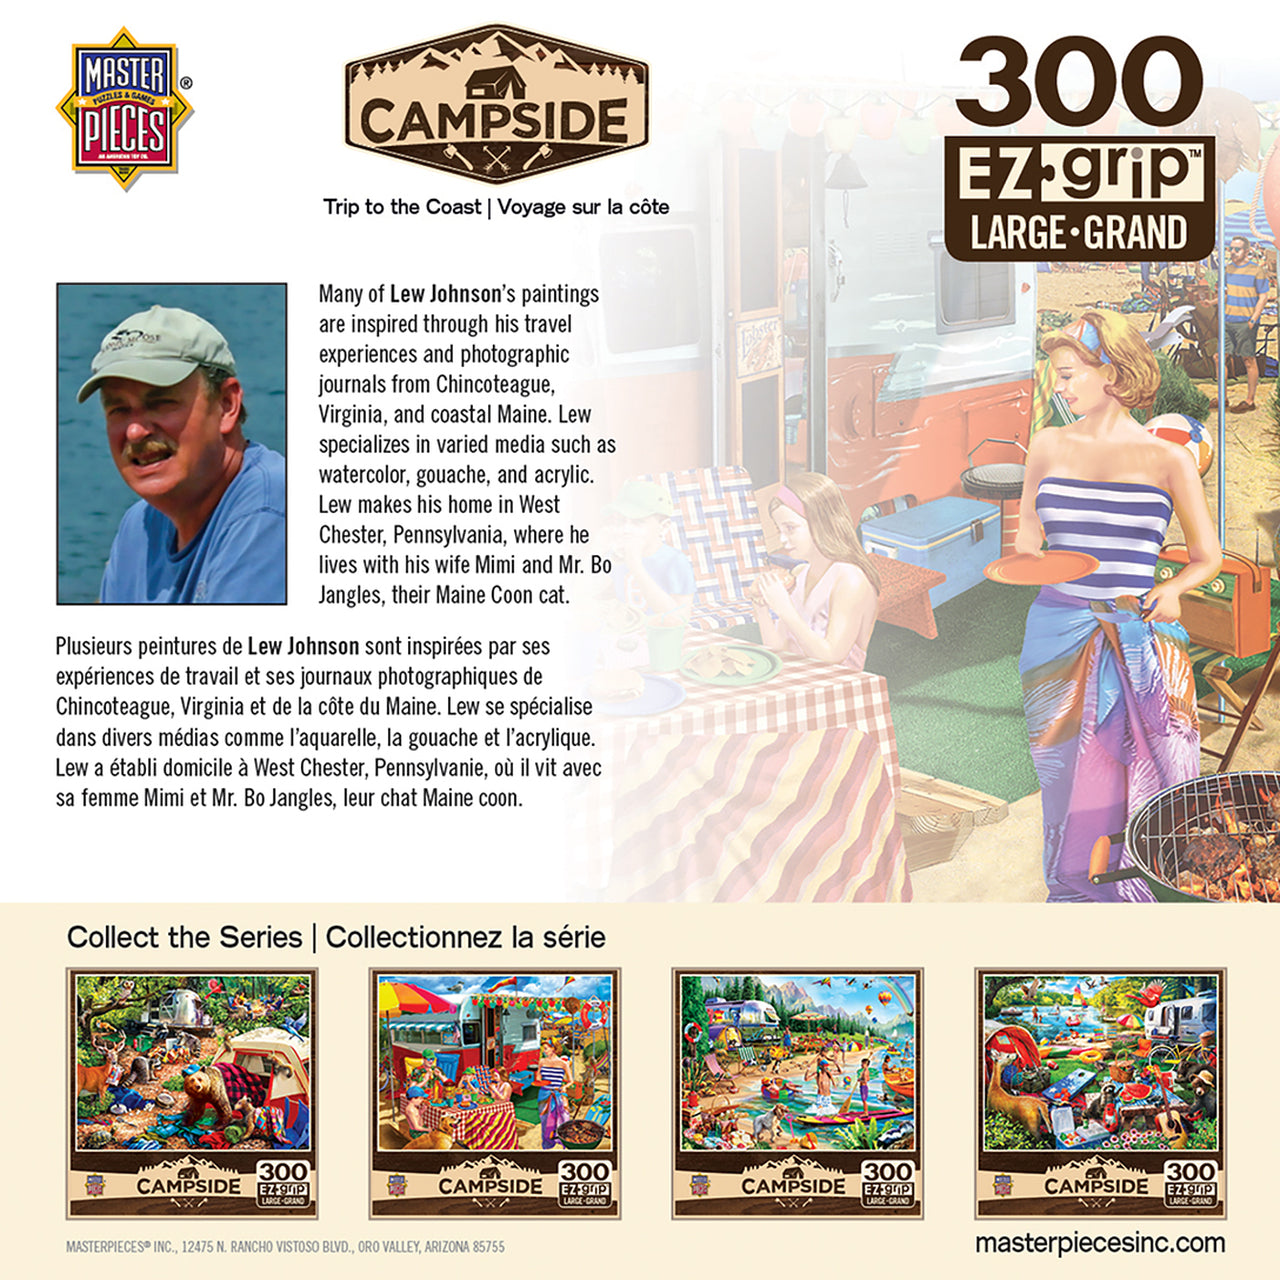 Campside - Trip to the Coast 300 Large Piece EZ Grip Puzzle by Masterpieces